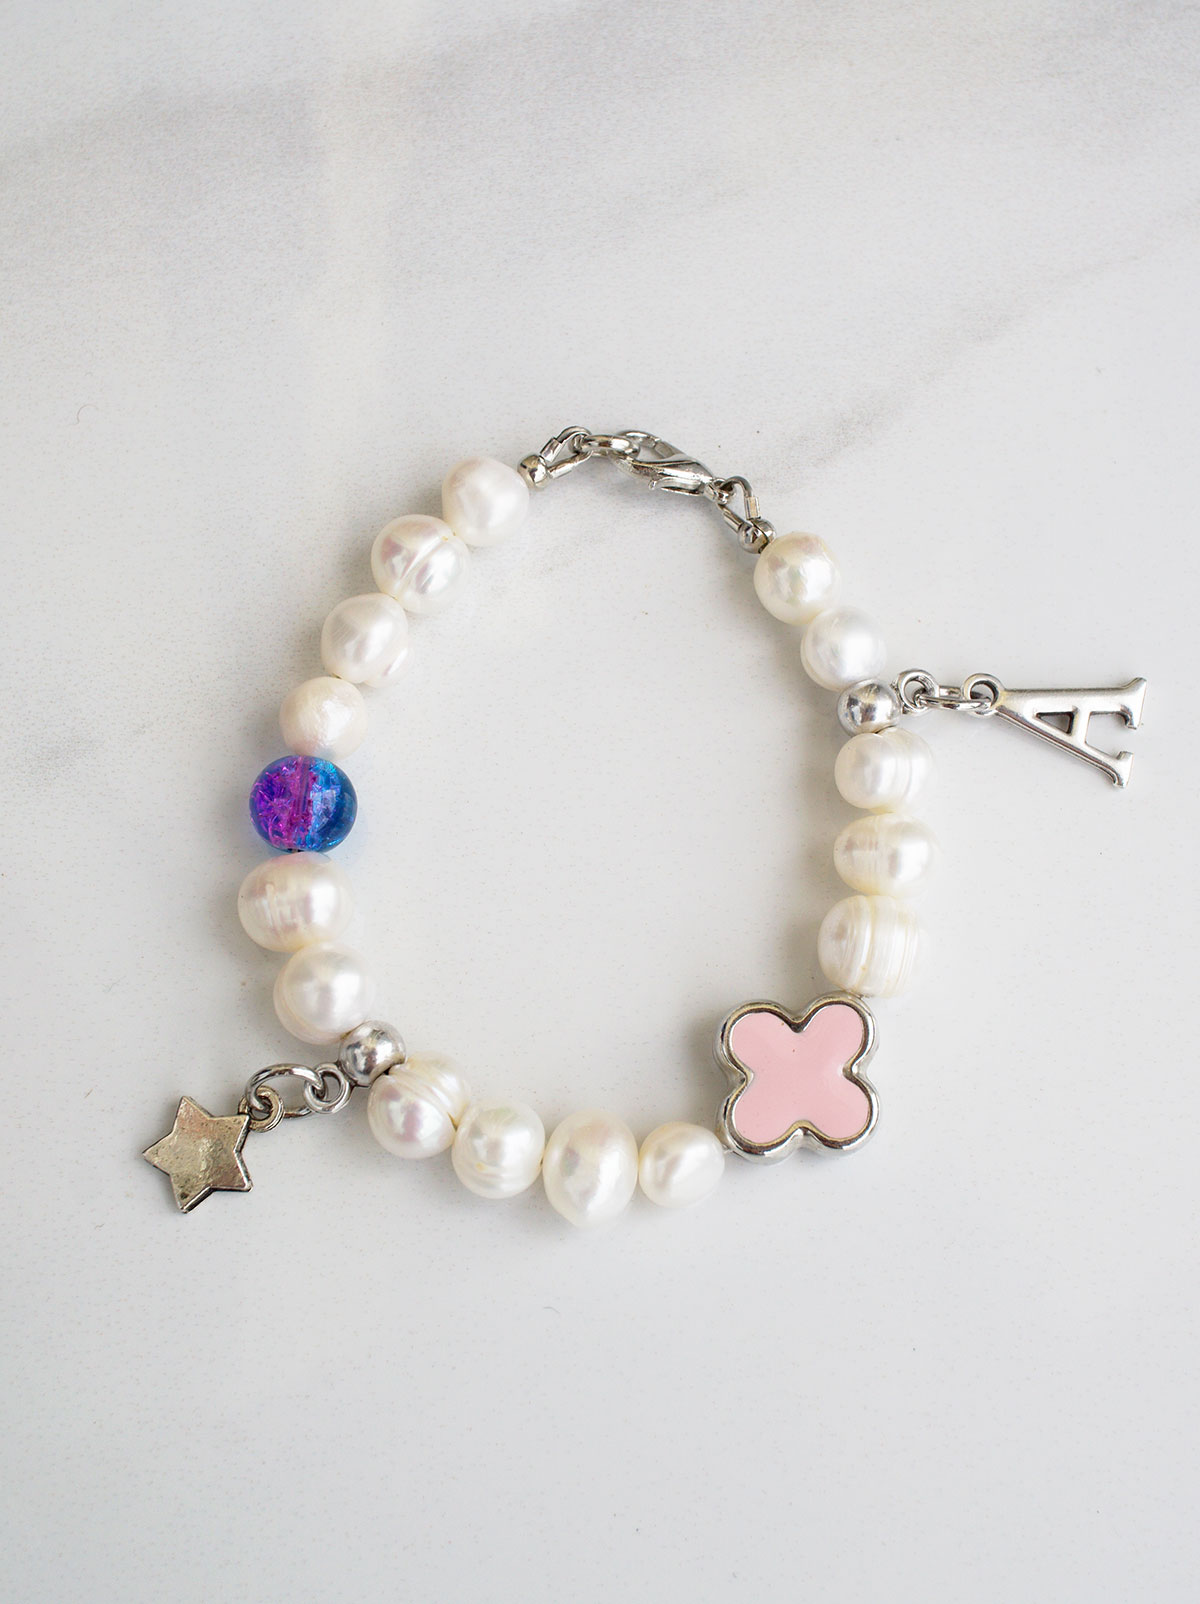 Pearl Bead Baby Girl Bracelet Pendant Bracelet Bangle Jewelry For Kids Gift KWQY 